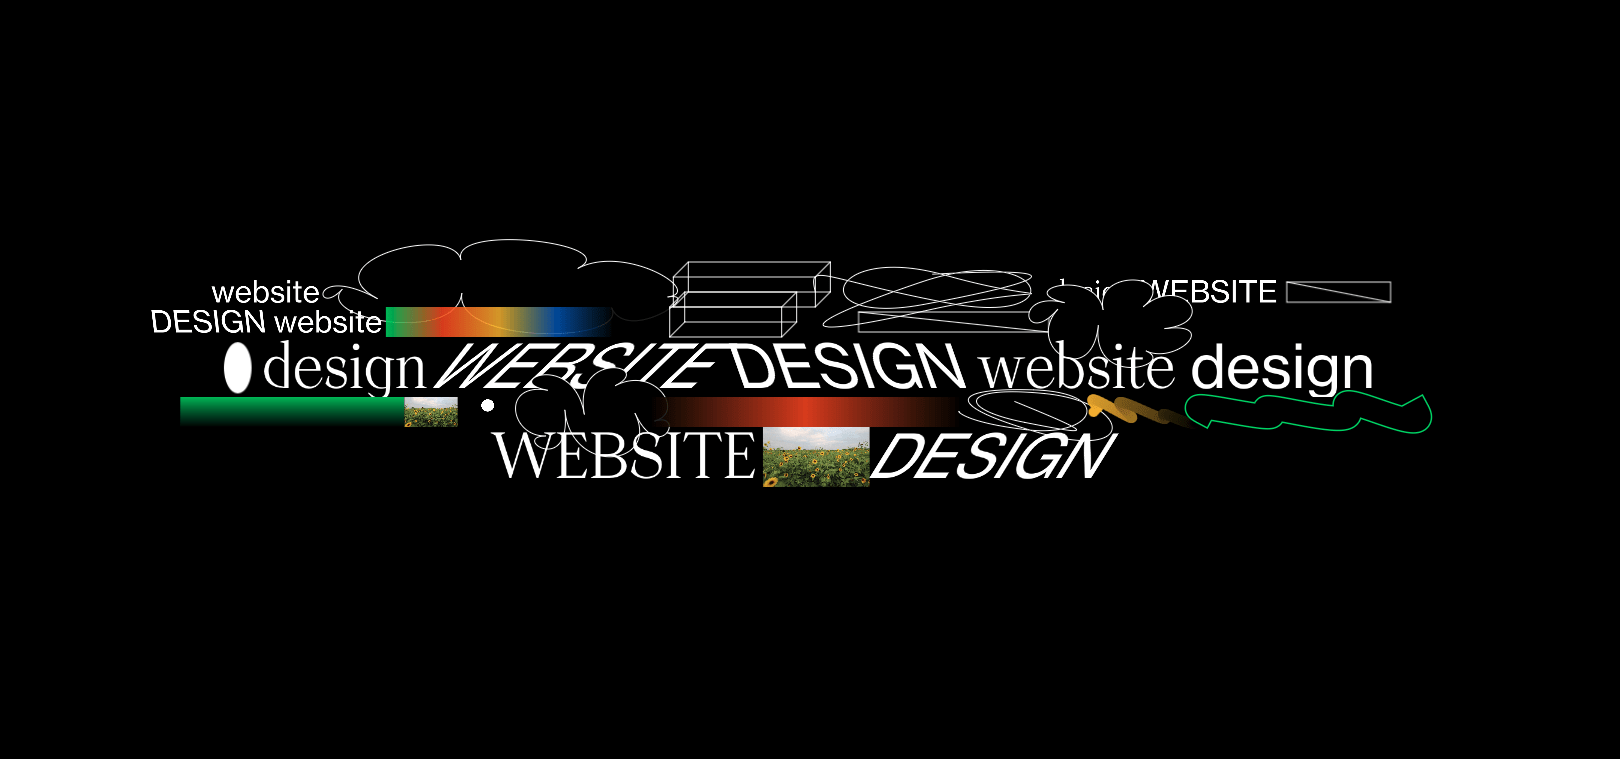 WEBSITE DESIGN HEADER 1